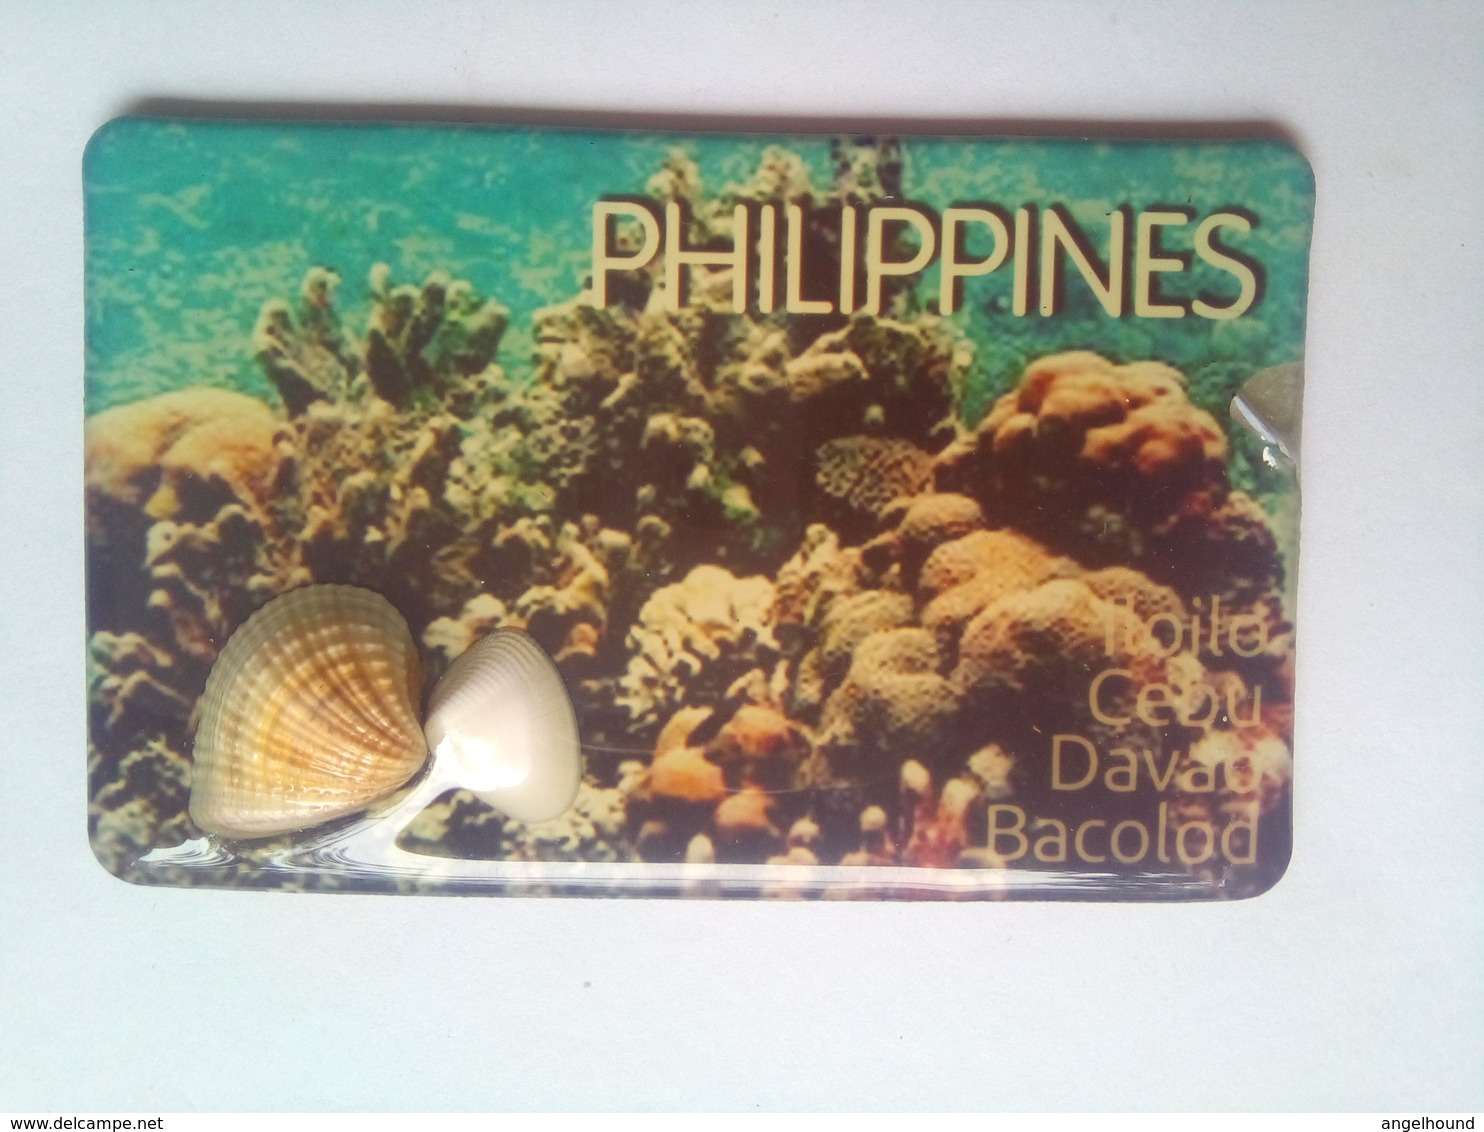 Shells Iloilo Cebu Davao Bacolod - Transports